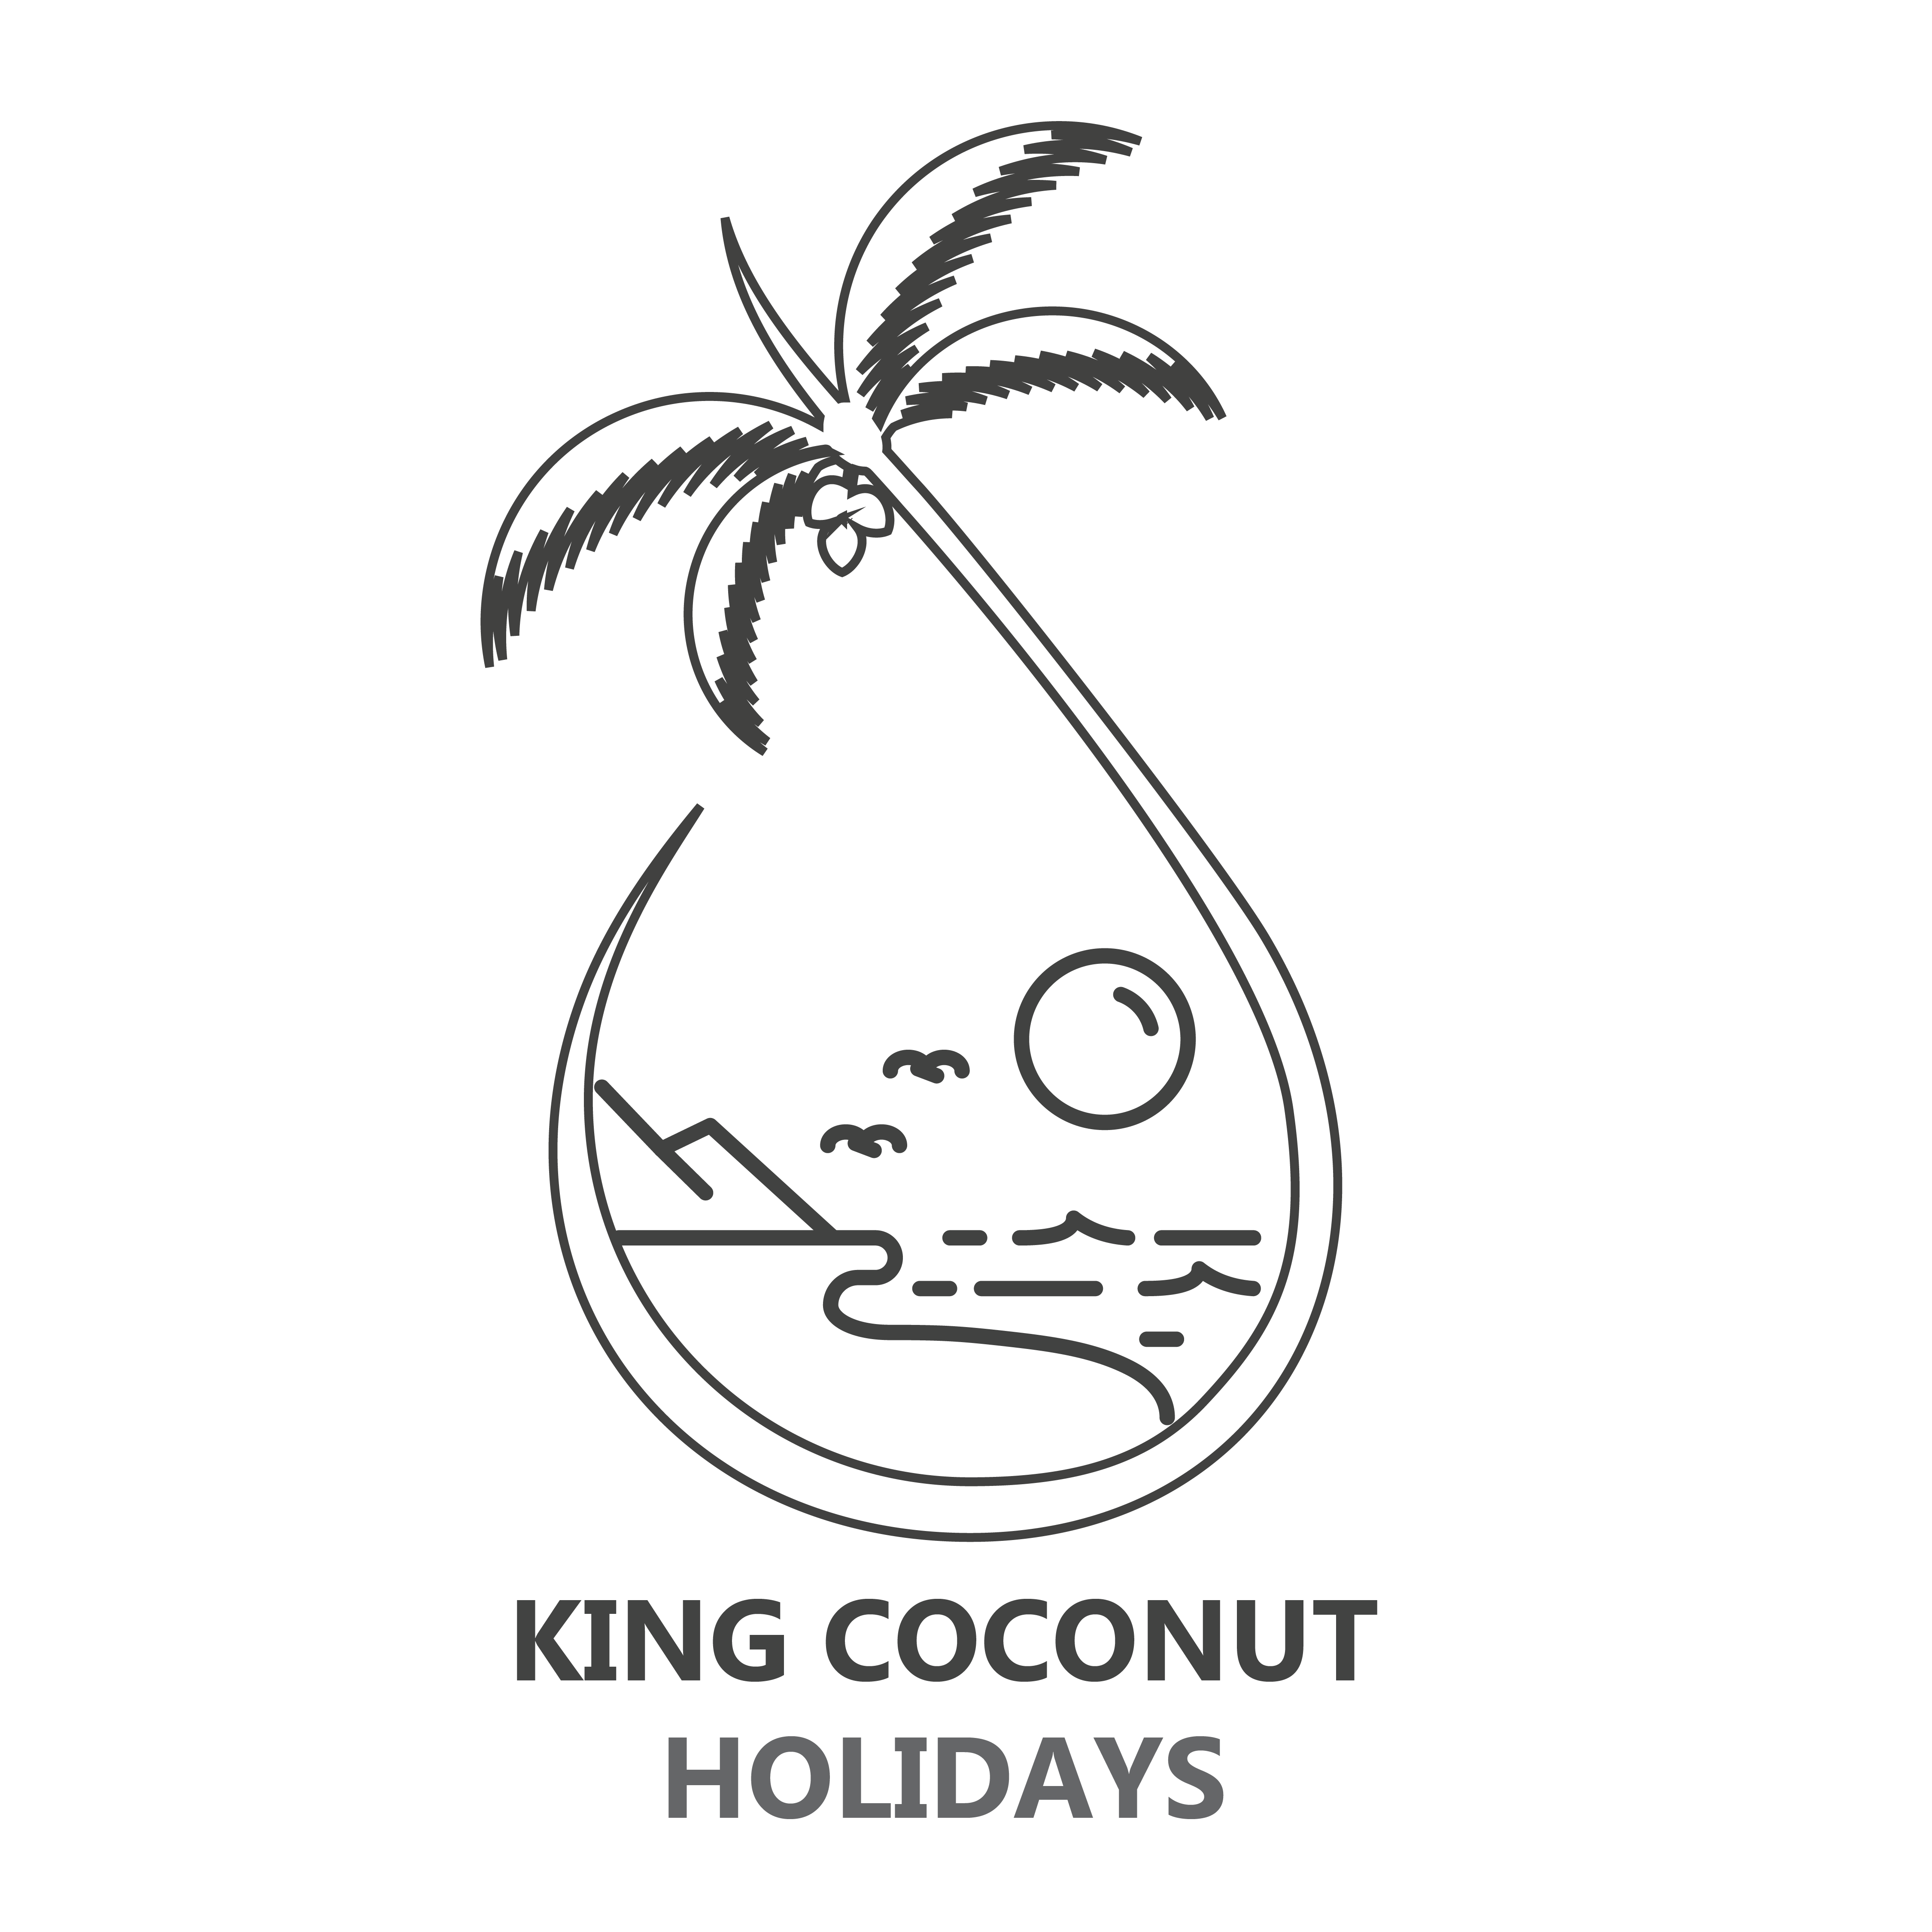 King Coconut Holidays